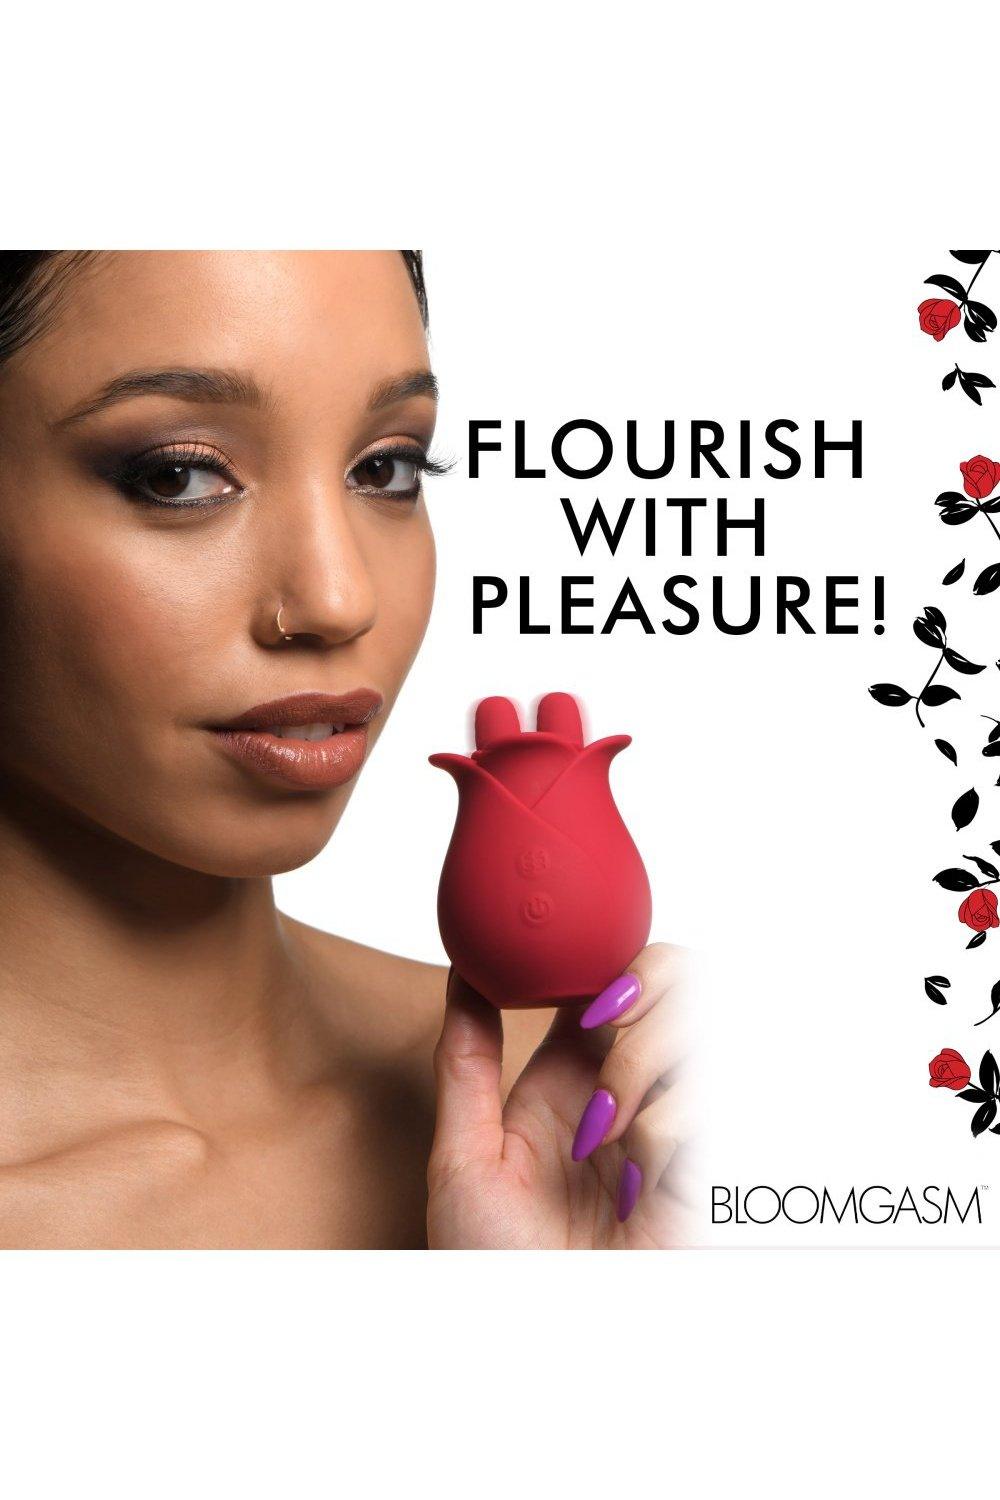 10X Fondle Massaging Rose Silicone Clit Stimulators - Sex On the Go